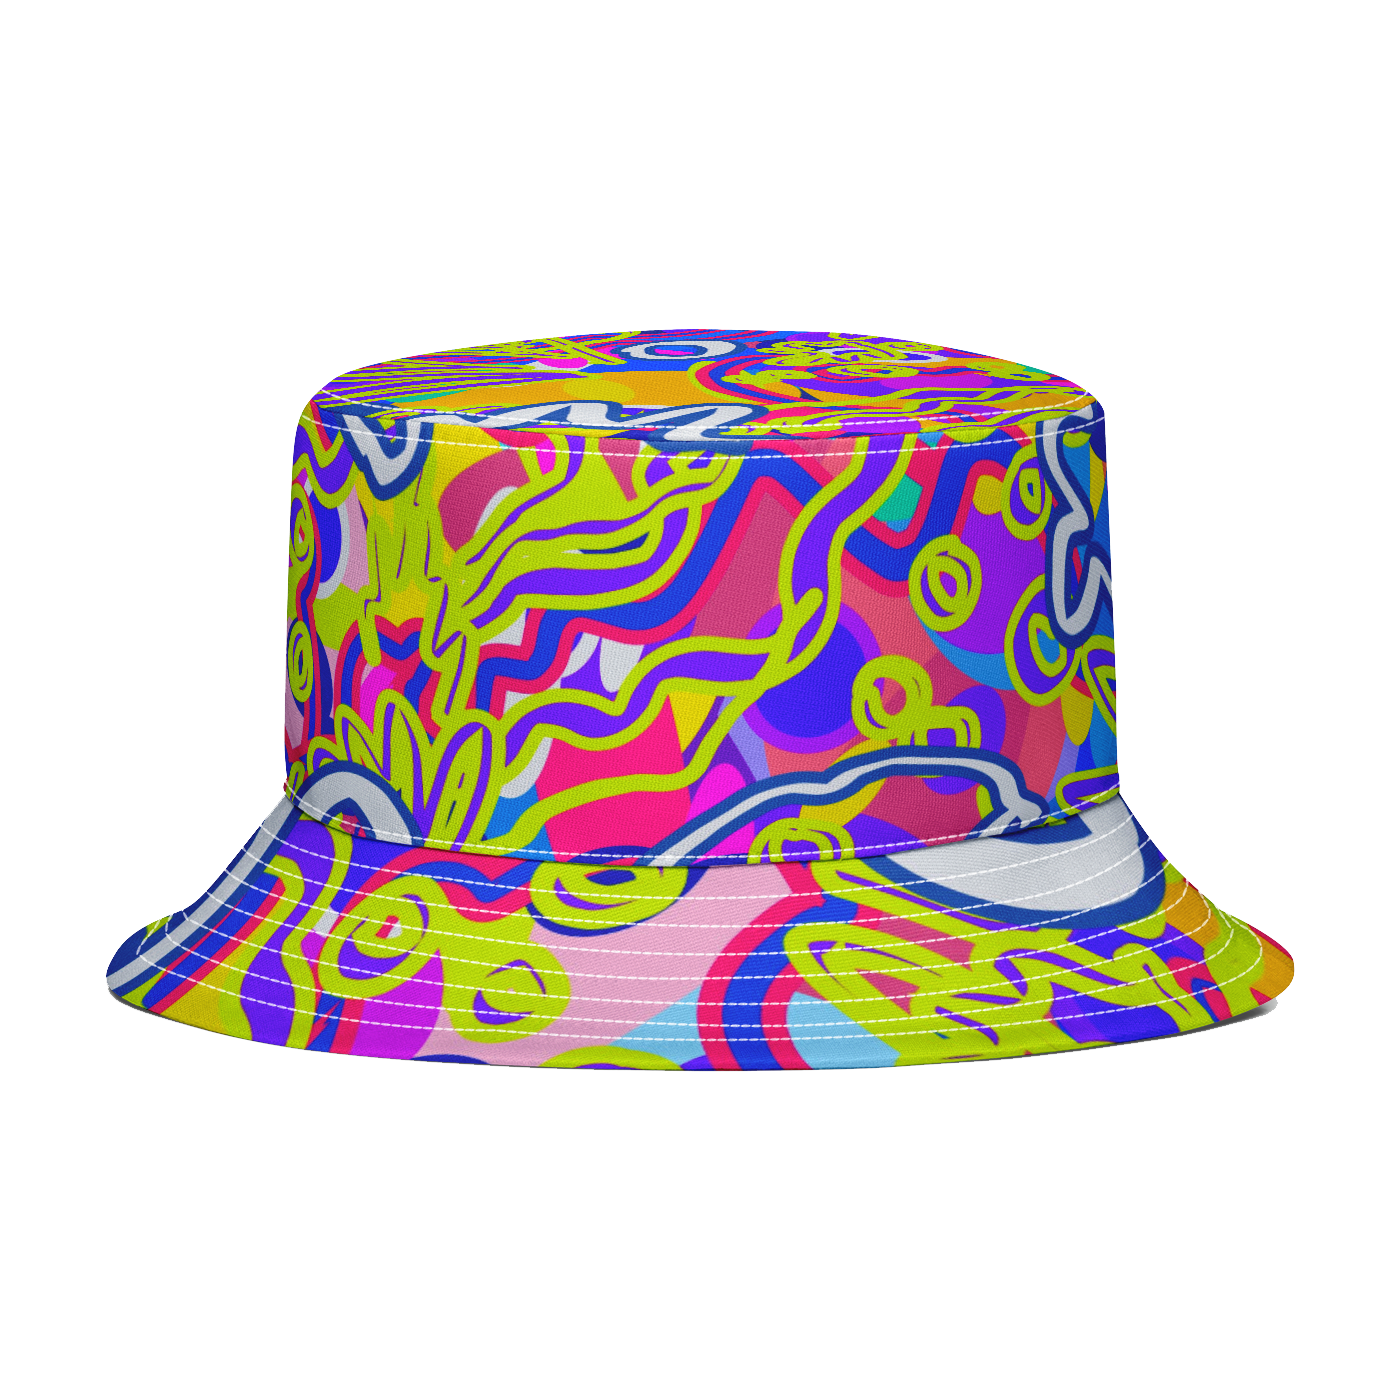 Crazy Psychedelic Rave Bucket Hat